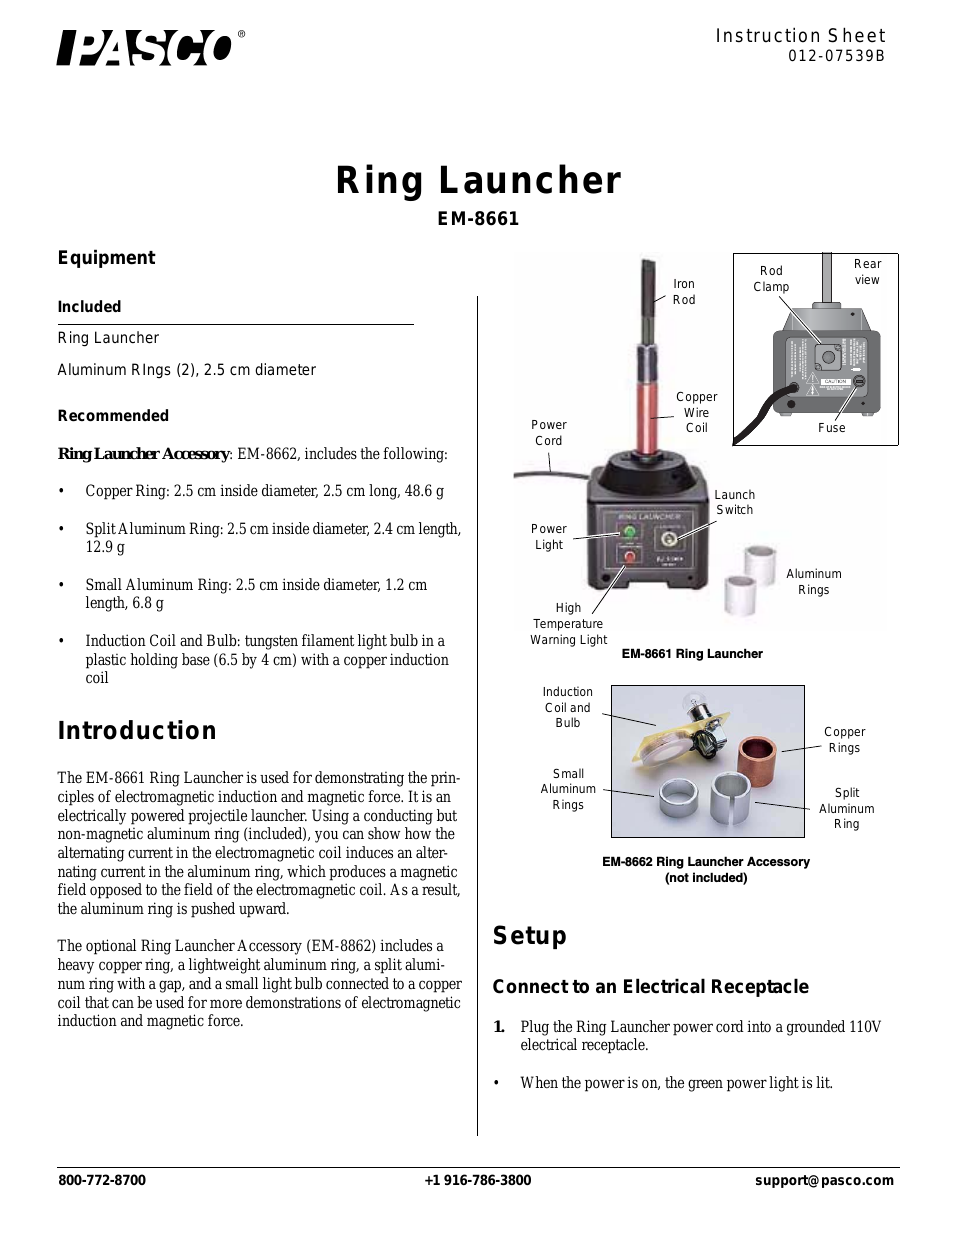 EM-8661 Ring Launcher